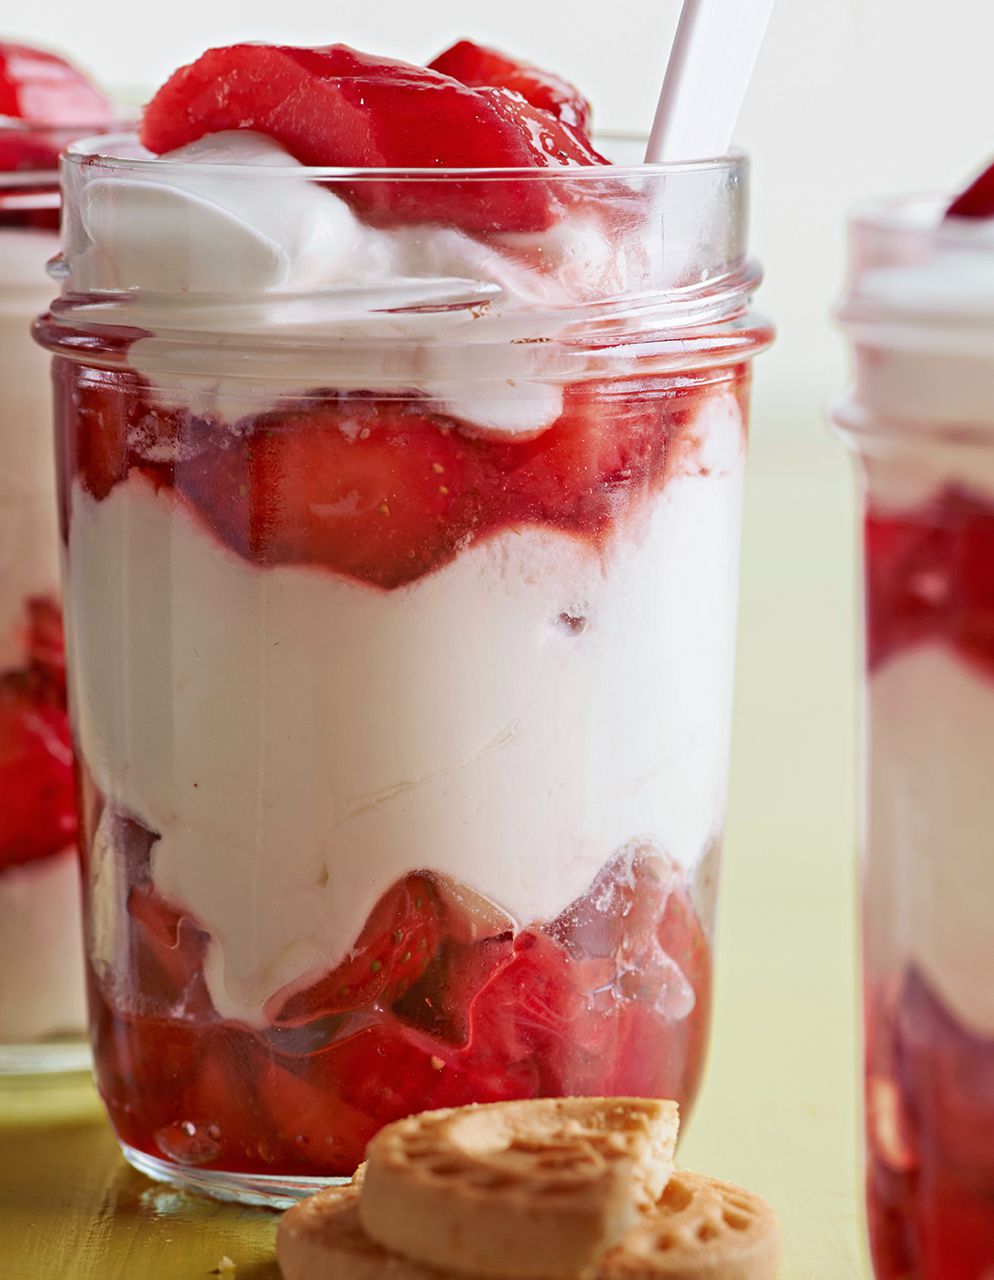 Strawberry and Rhubarb with Cheesecake Cream